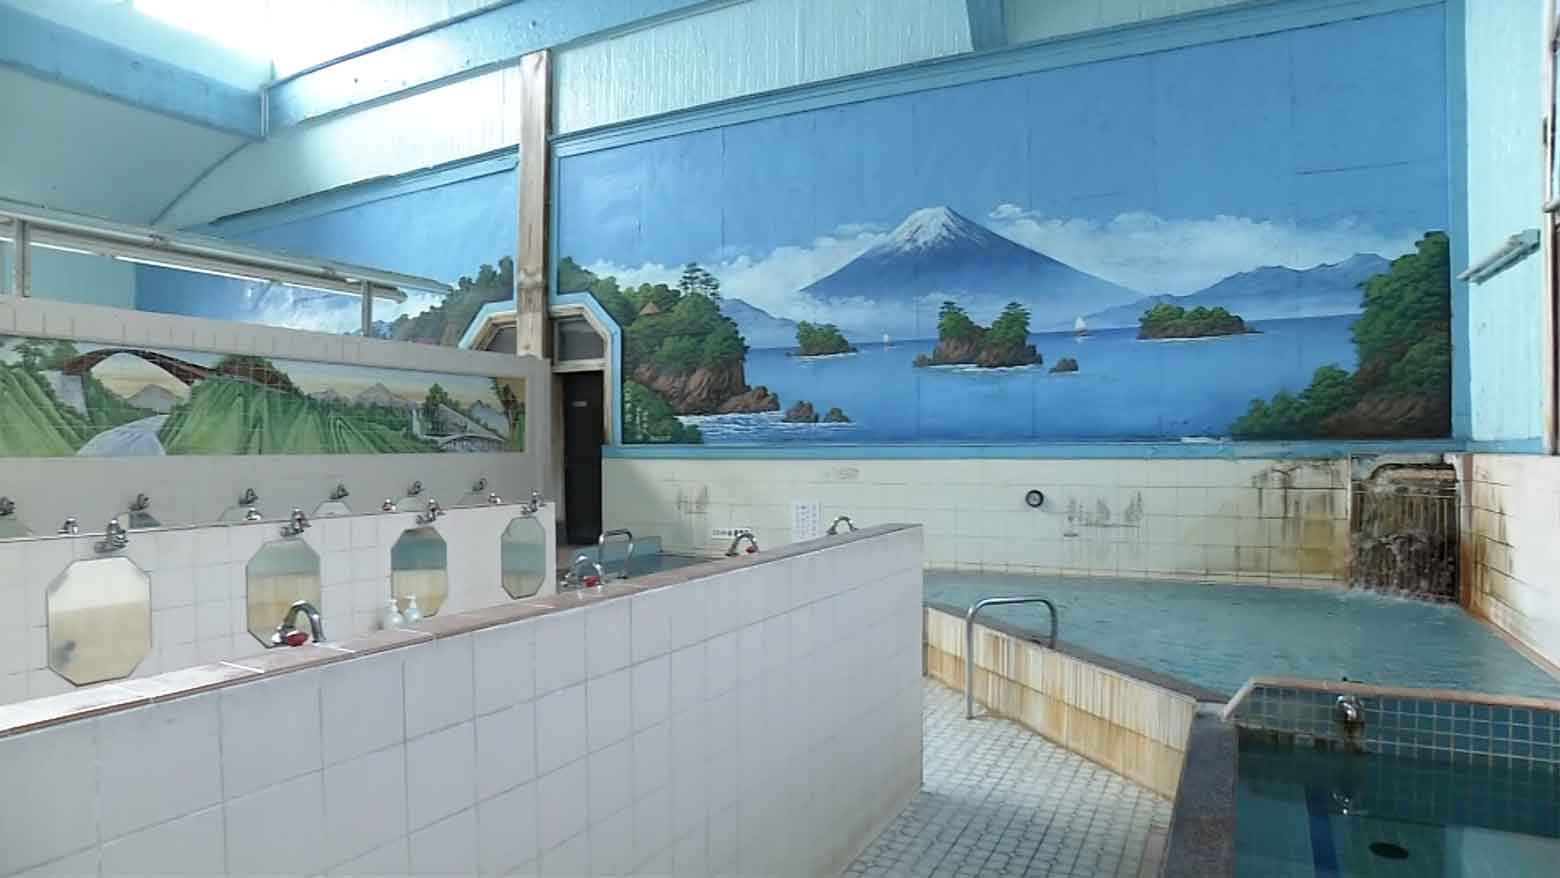 Public bathhouses revamped for modern Japan